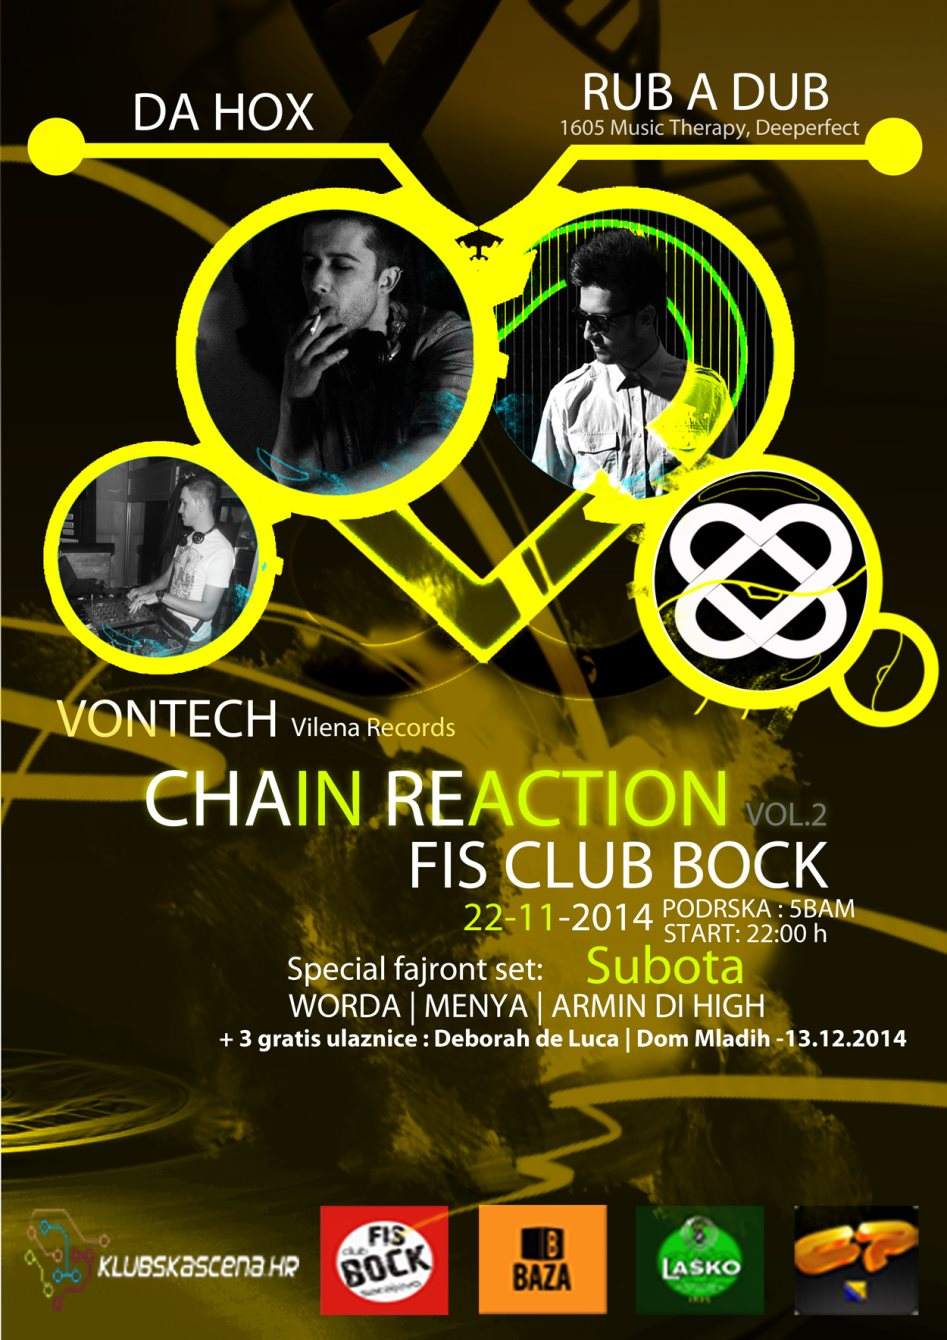 Fis Club Bock - Chain Reaction Vol. 2 - フライヤー裏